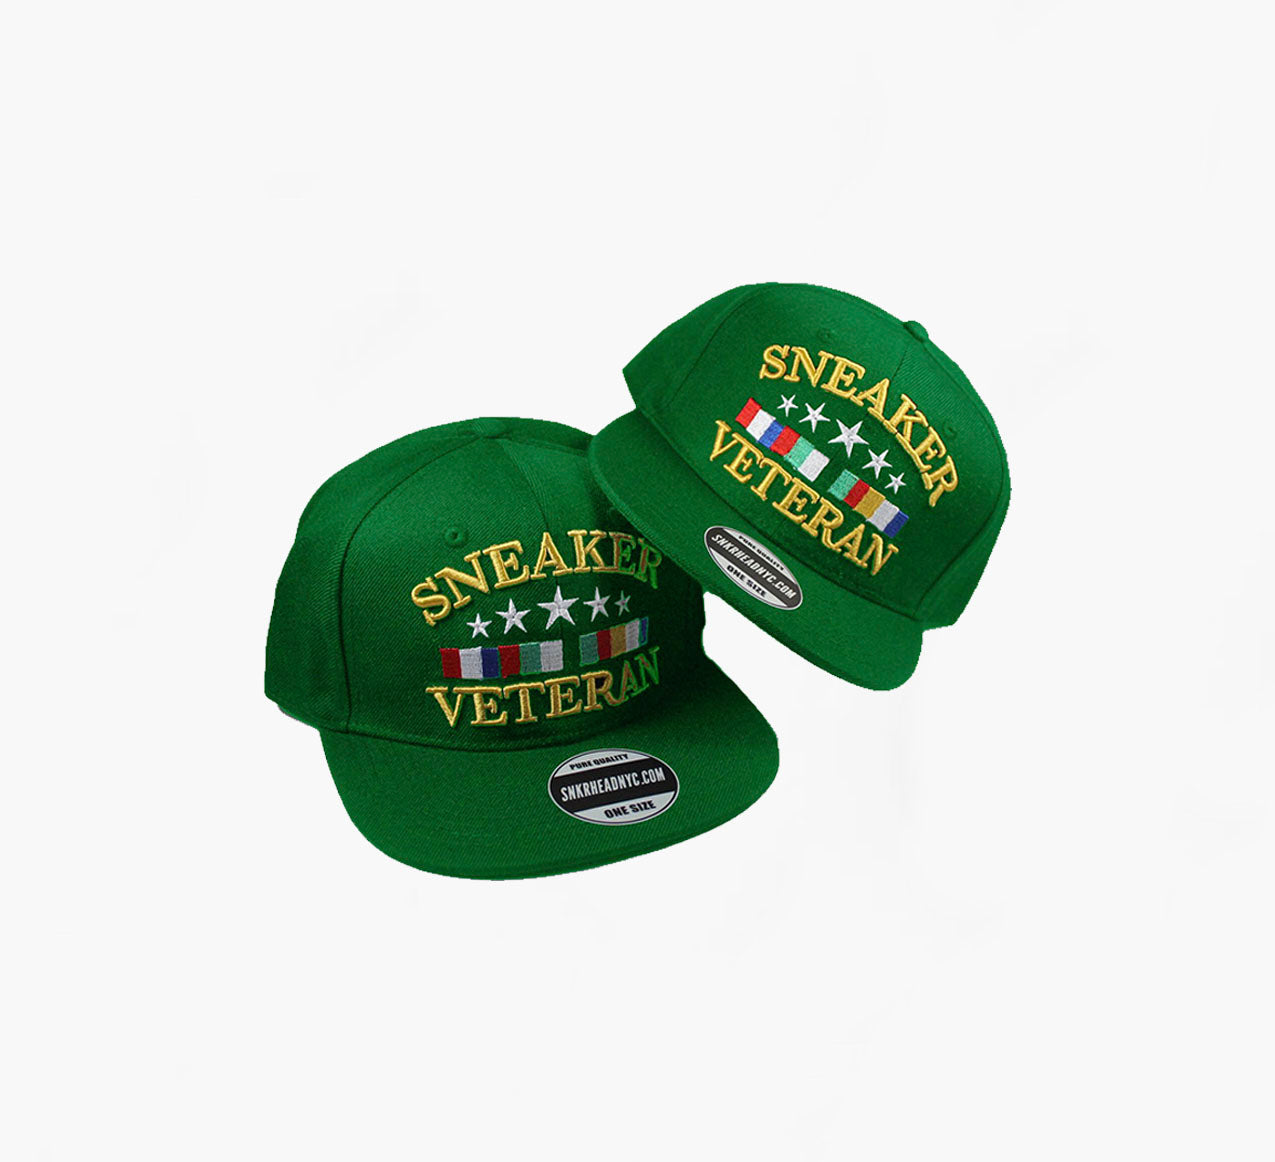 Sneaker Veteran Green Snapback Hat